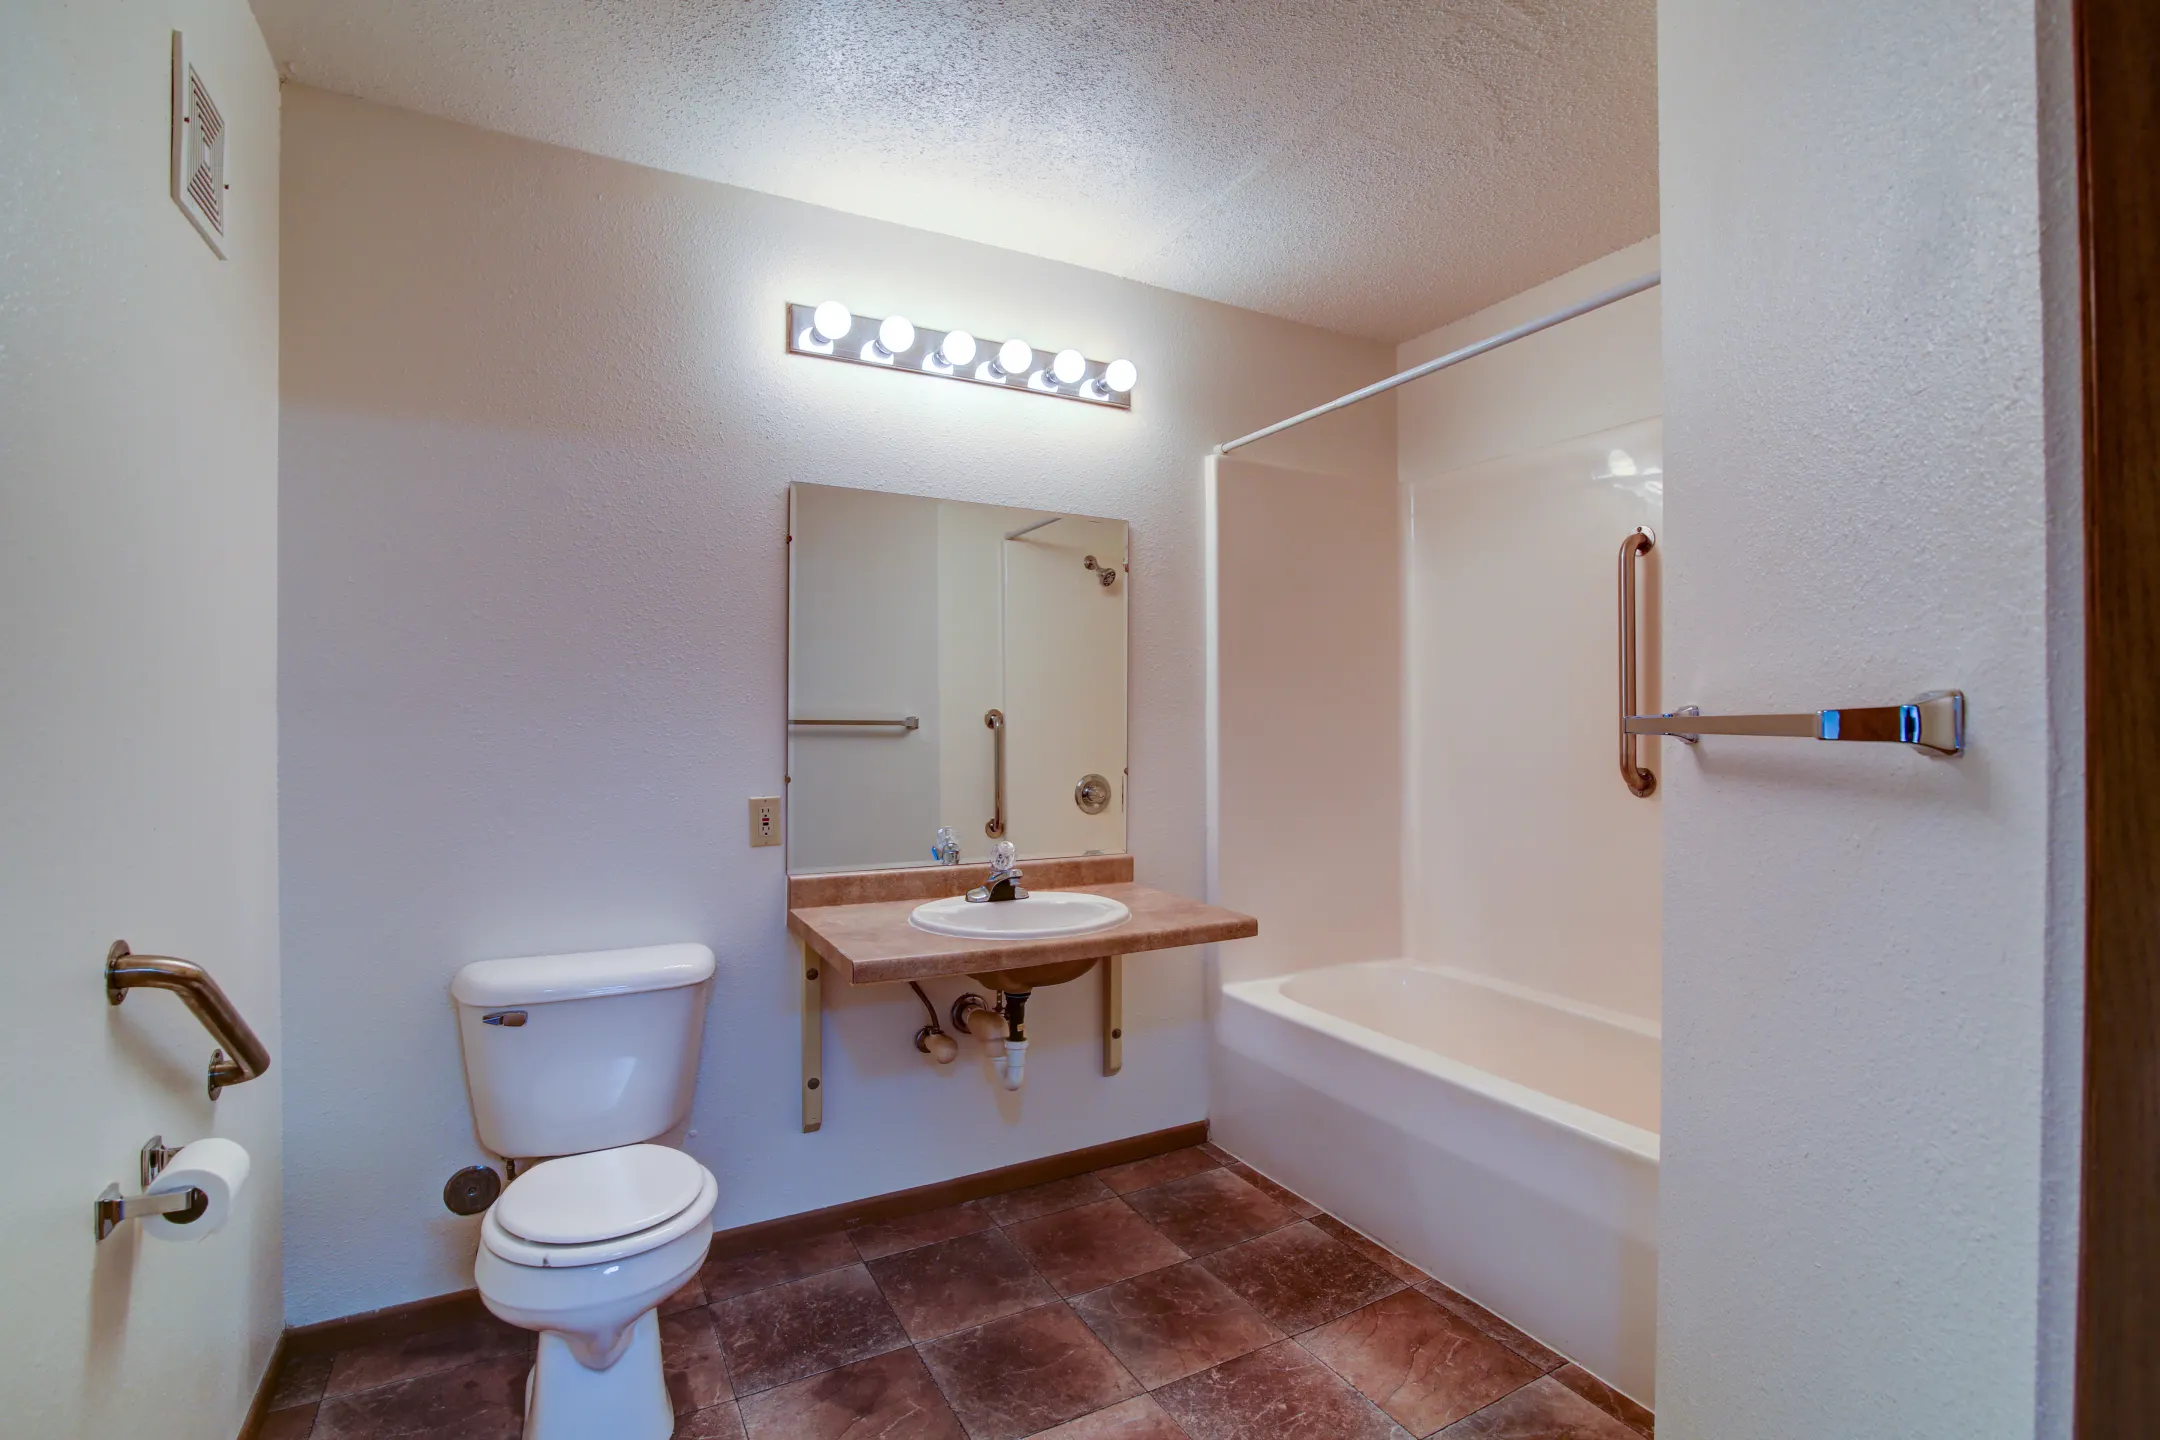 Bathroom - Calgary Apartments - Bismarck, ND